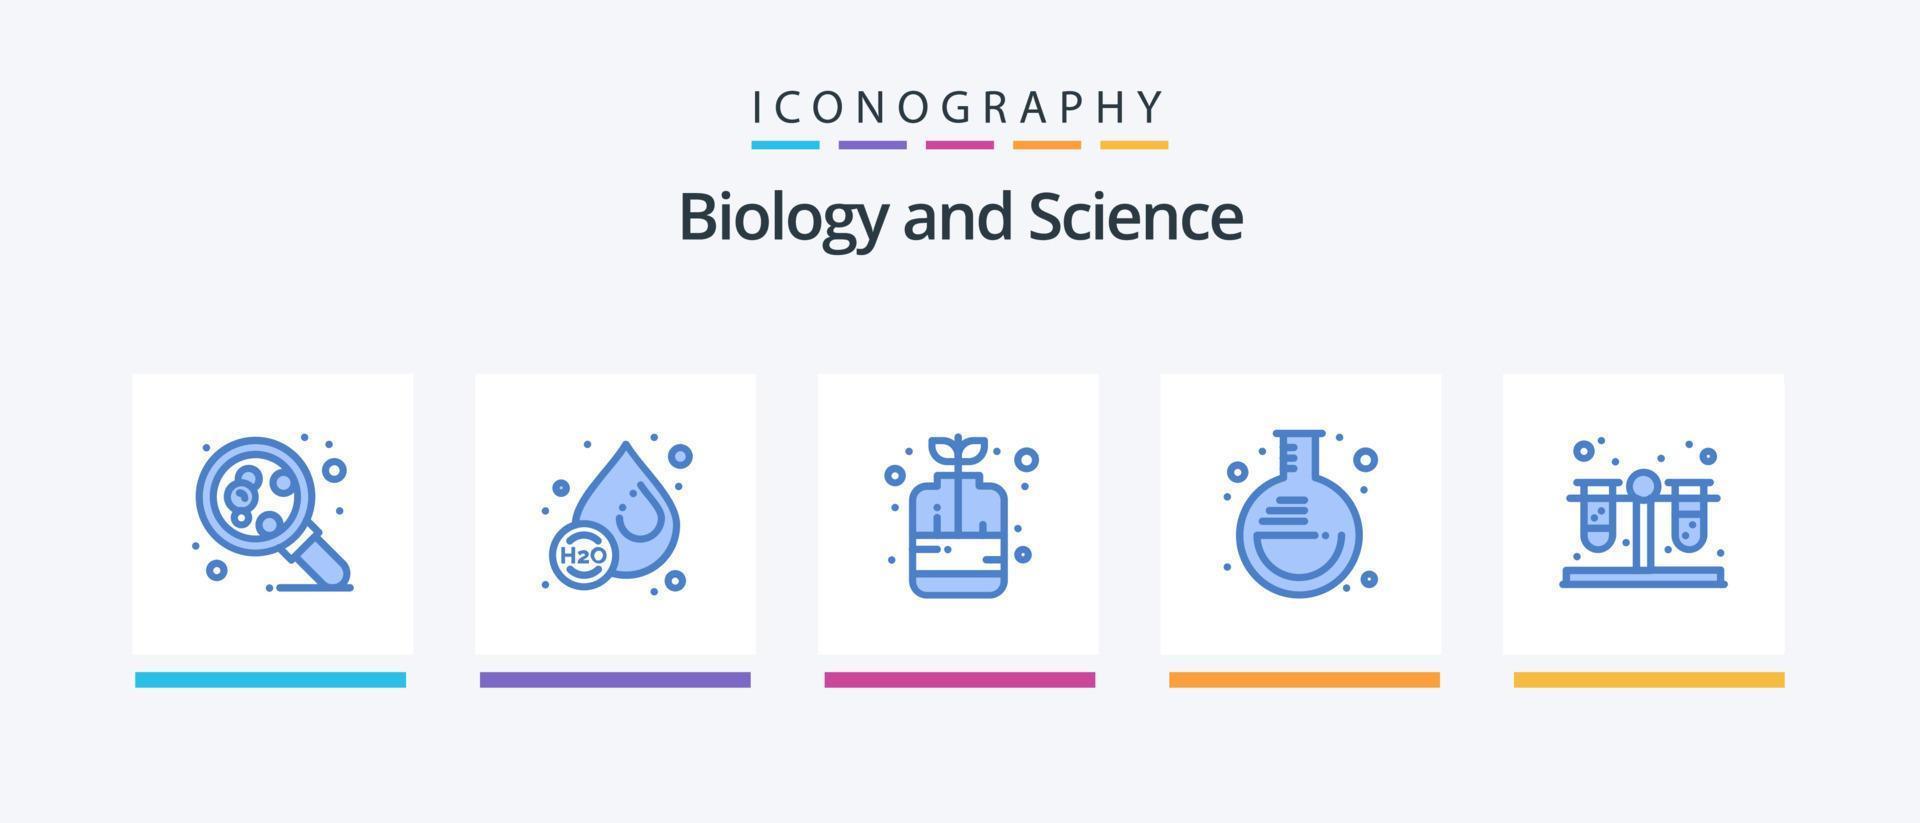 biologi blå 5 ikon packa Inklusive testa. labb. flaska. burk. experimentera. kreativ ikoner design vektor